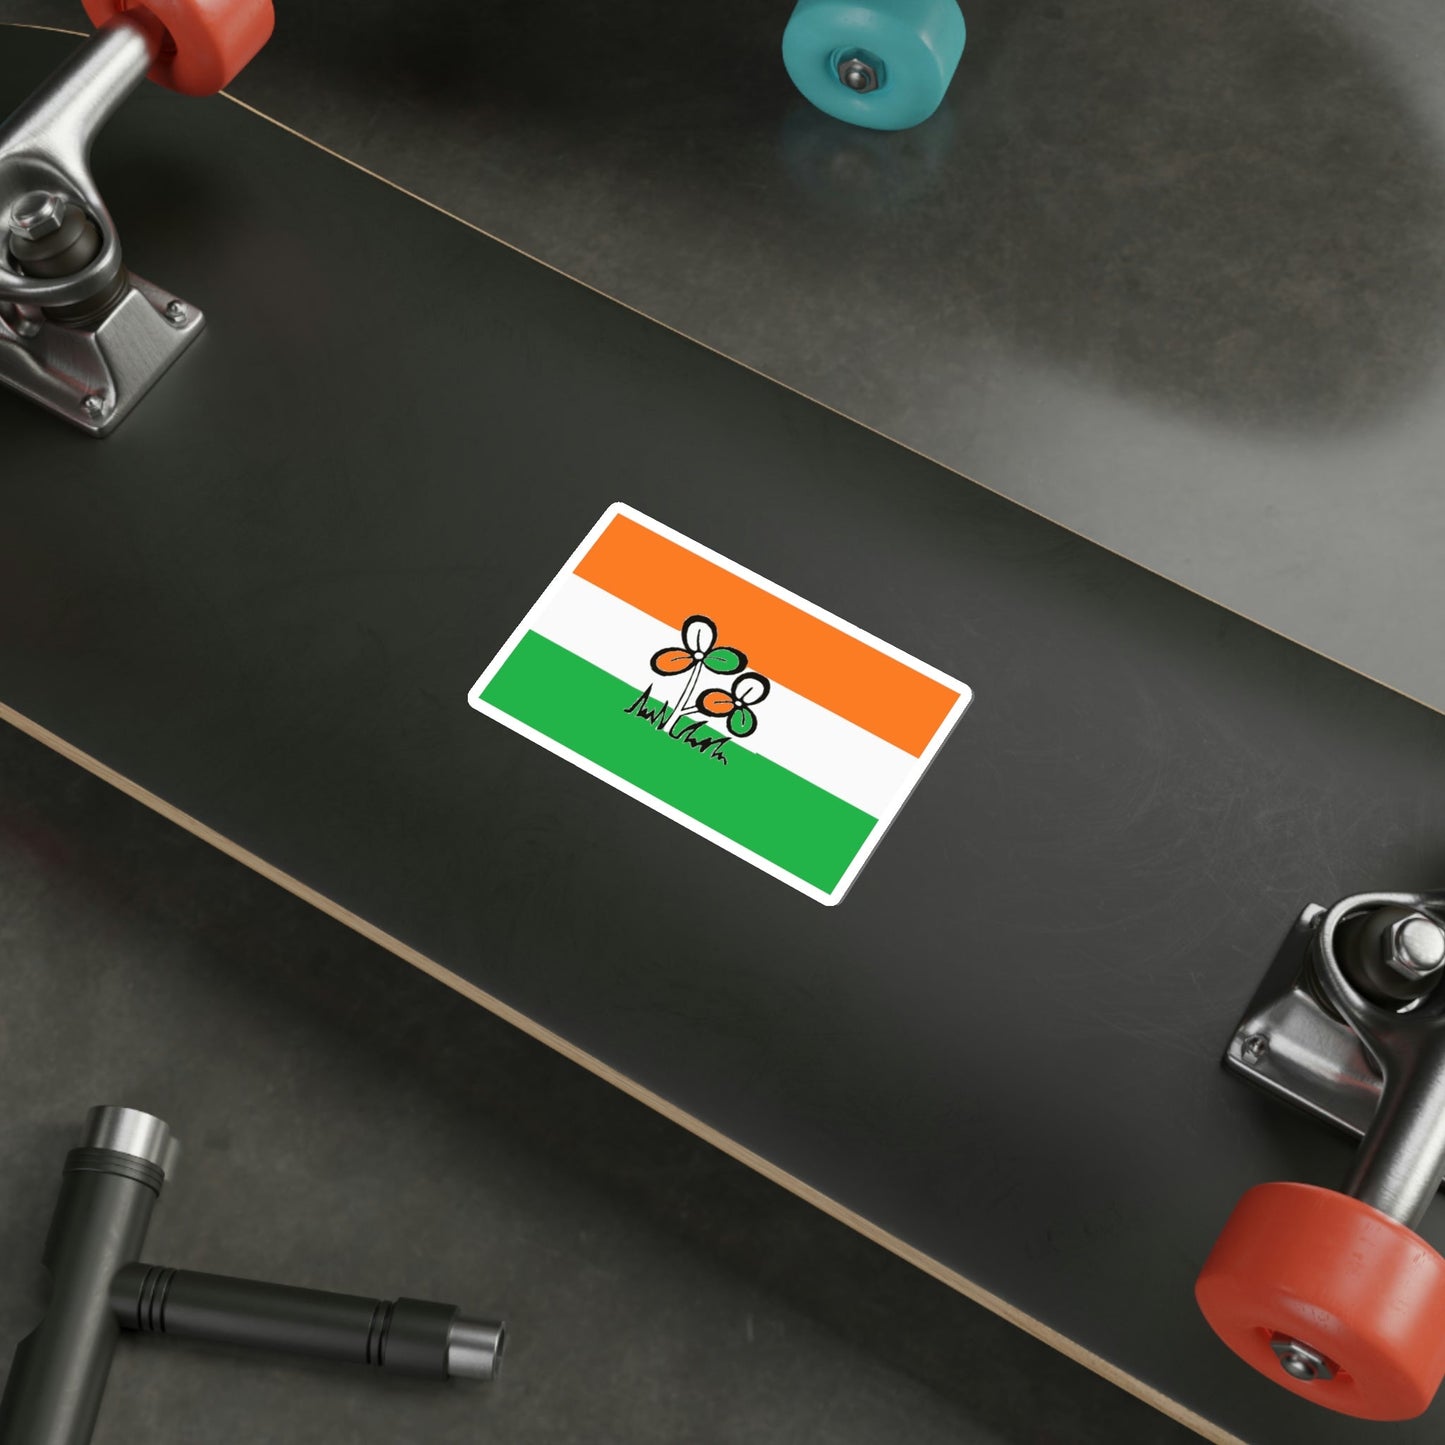 All India Trinamool Congress Flag (India) STICKER Vinyl Die-Cut Decal-The Sticker Space